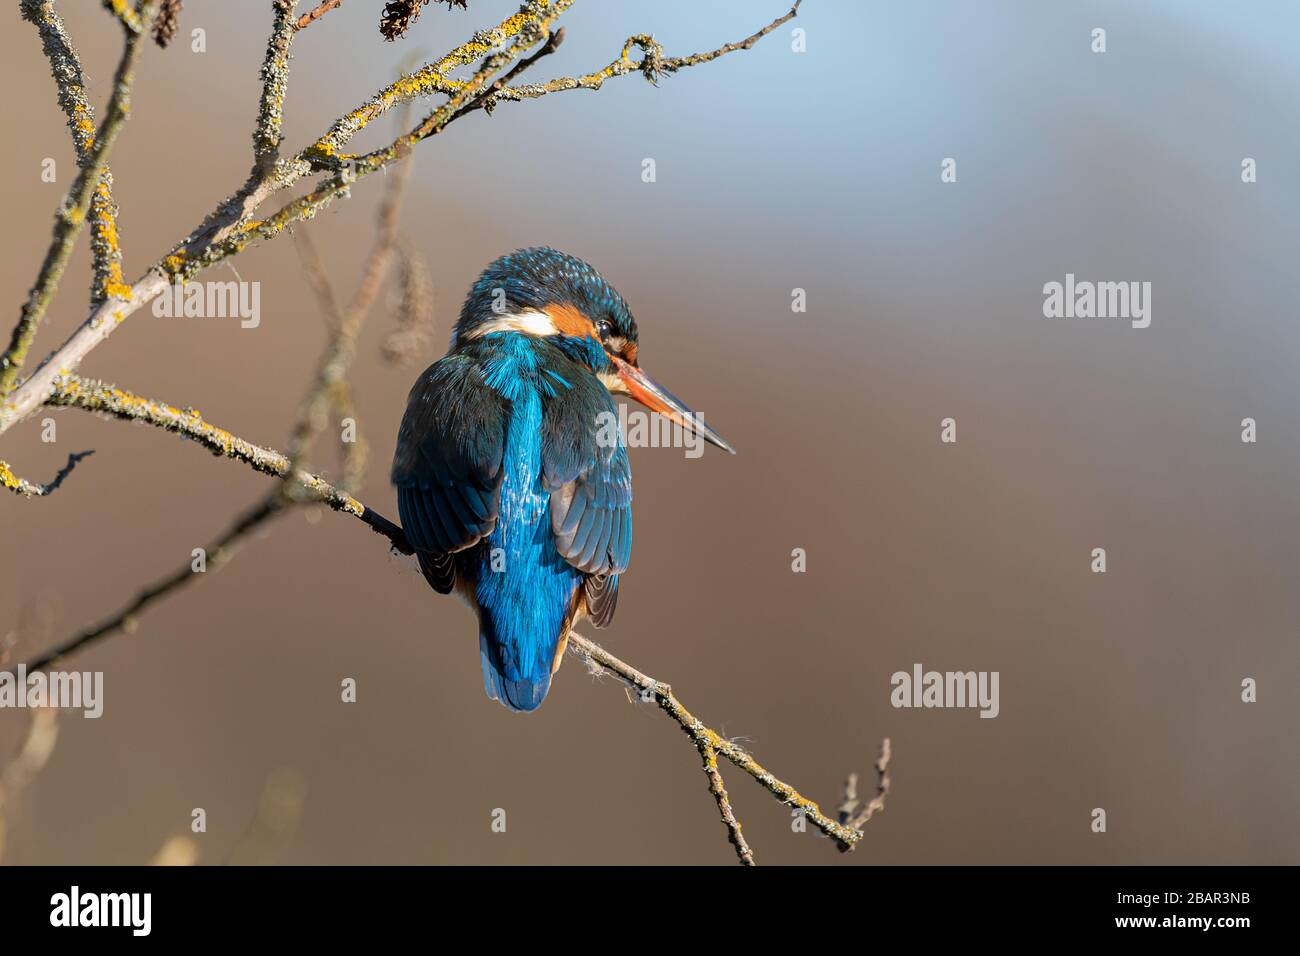 Kingfisher standing at a branch in Salburua, Vitoria, Spain Stock Photo